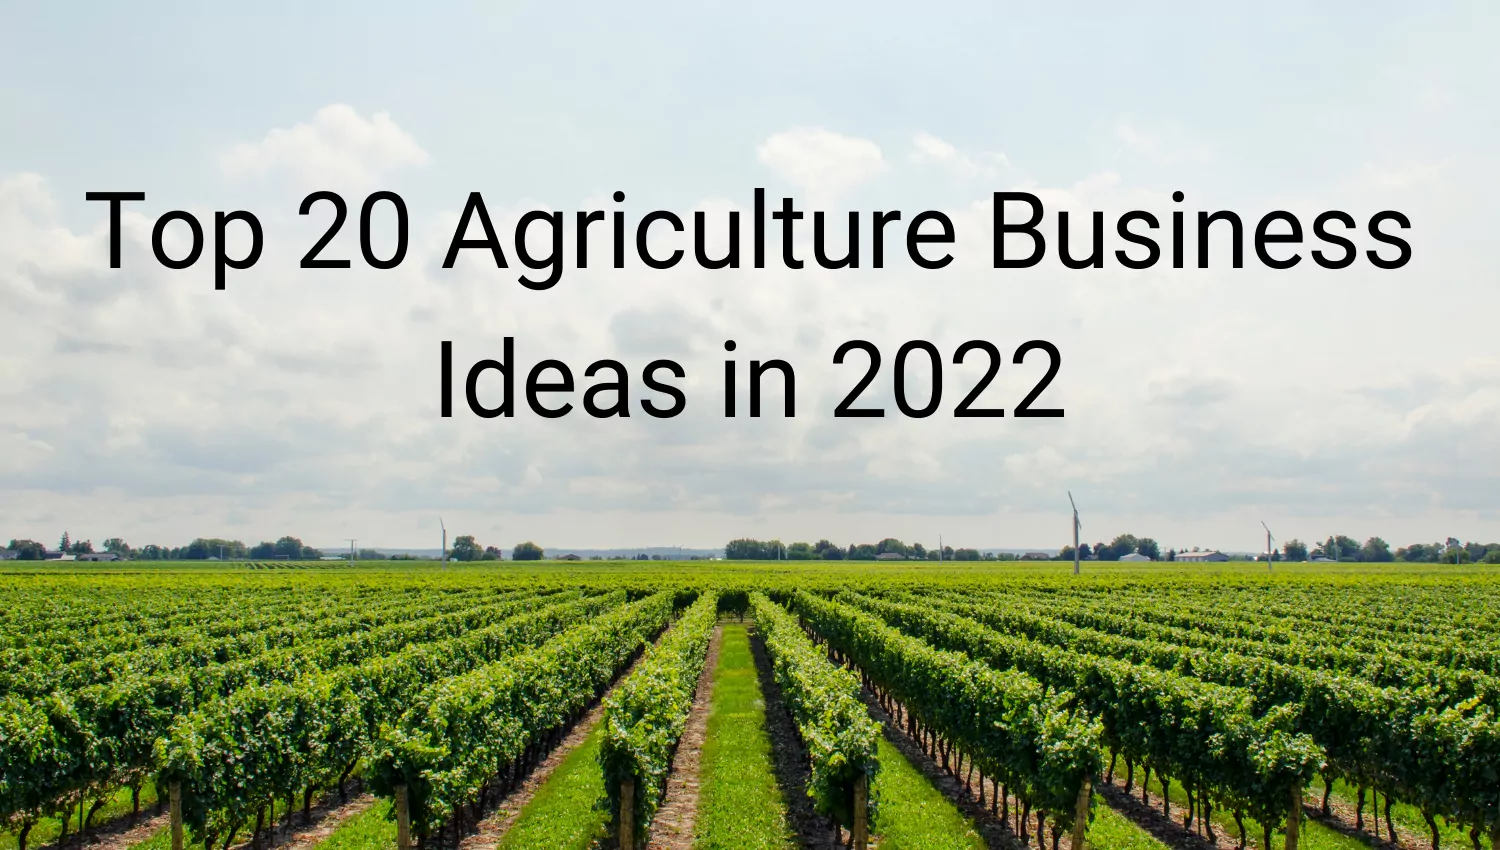 Agriculture Business Ideas Top 20 Farming Plans